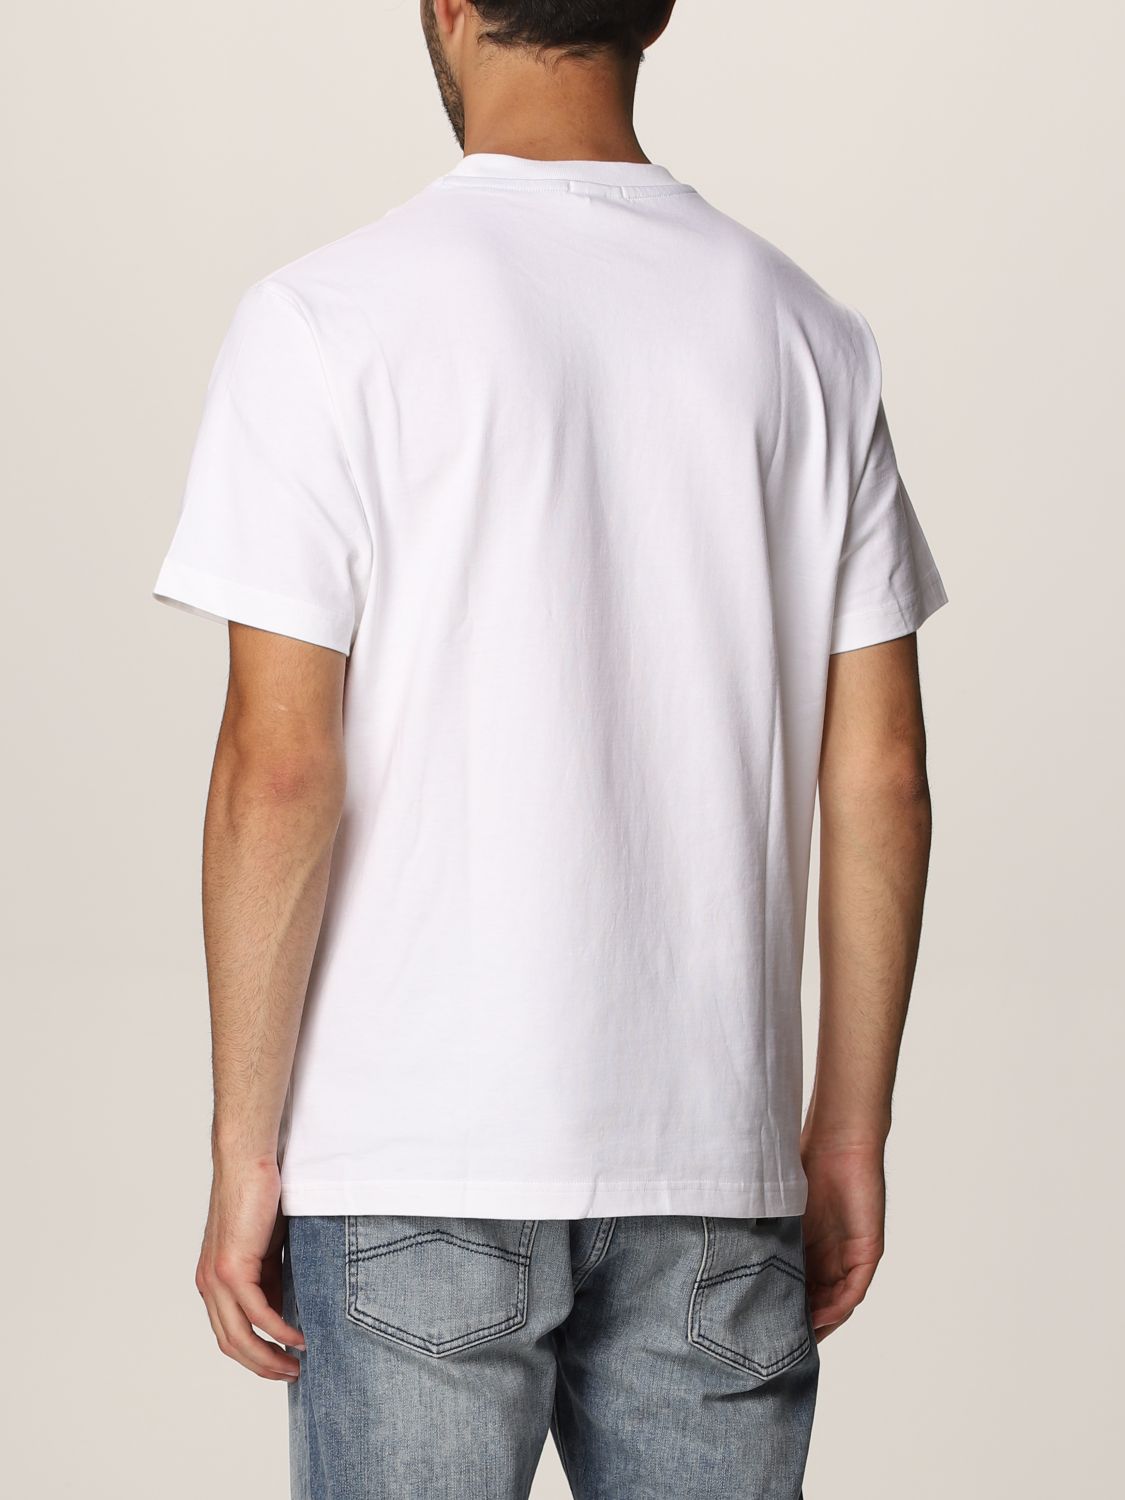 LACOSTE L!VE: T-shirt with logo - White | Lacoste L!Ve t-shirt TH9166 ...